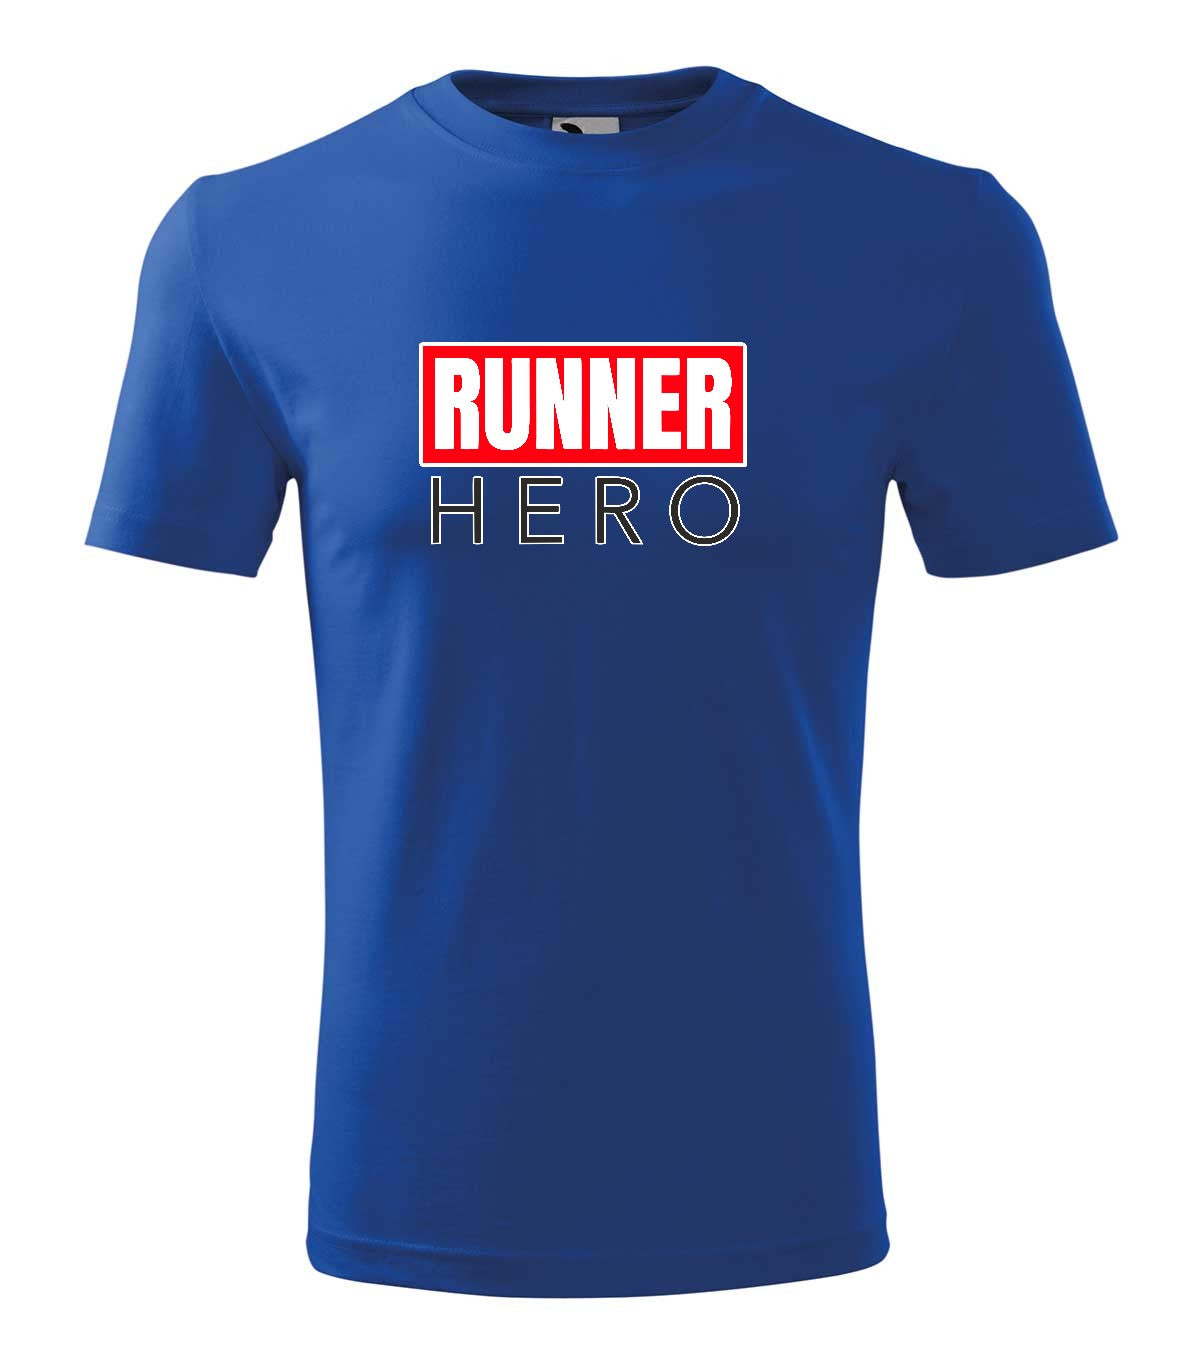 Runner Hero férfi technikai póló